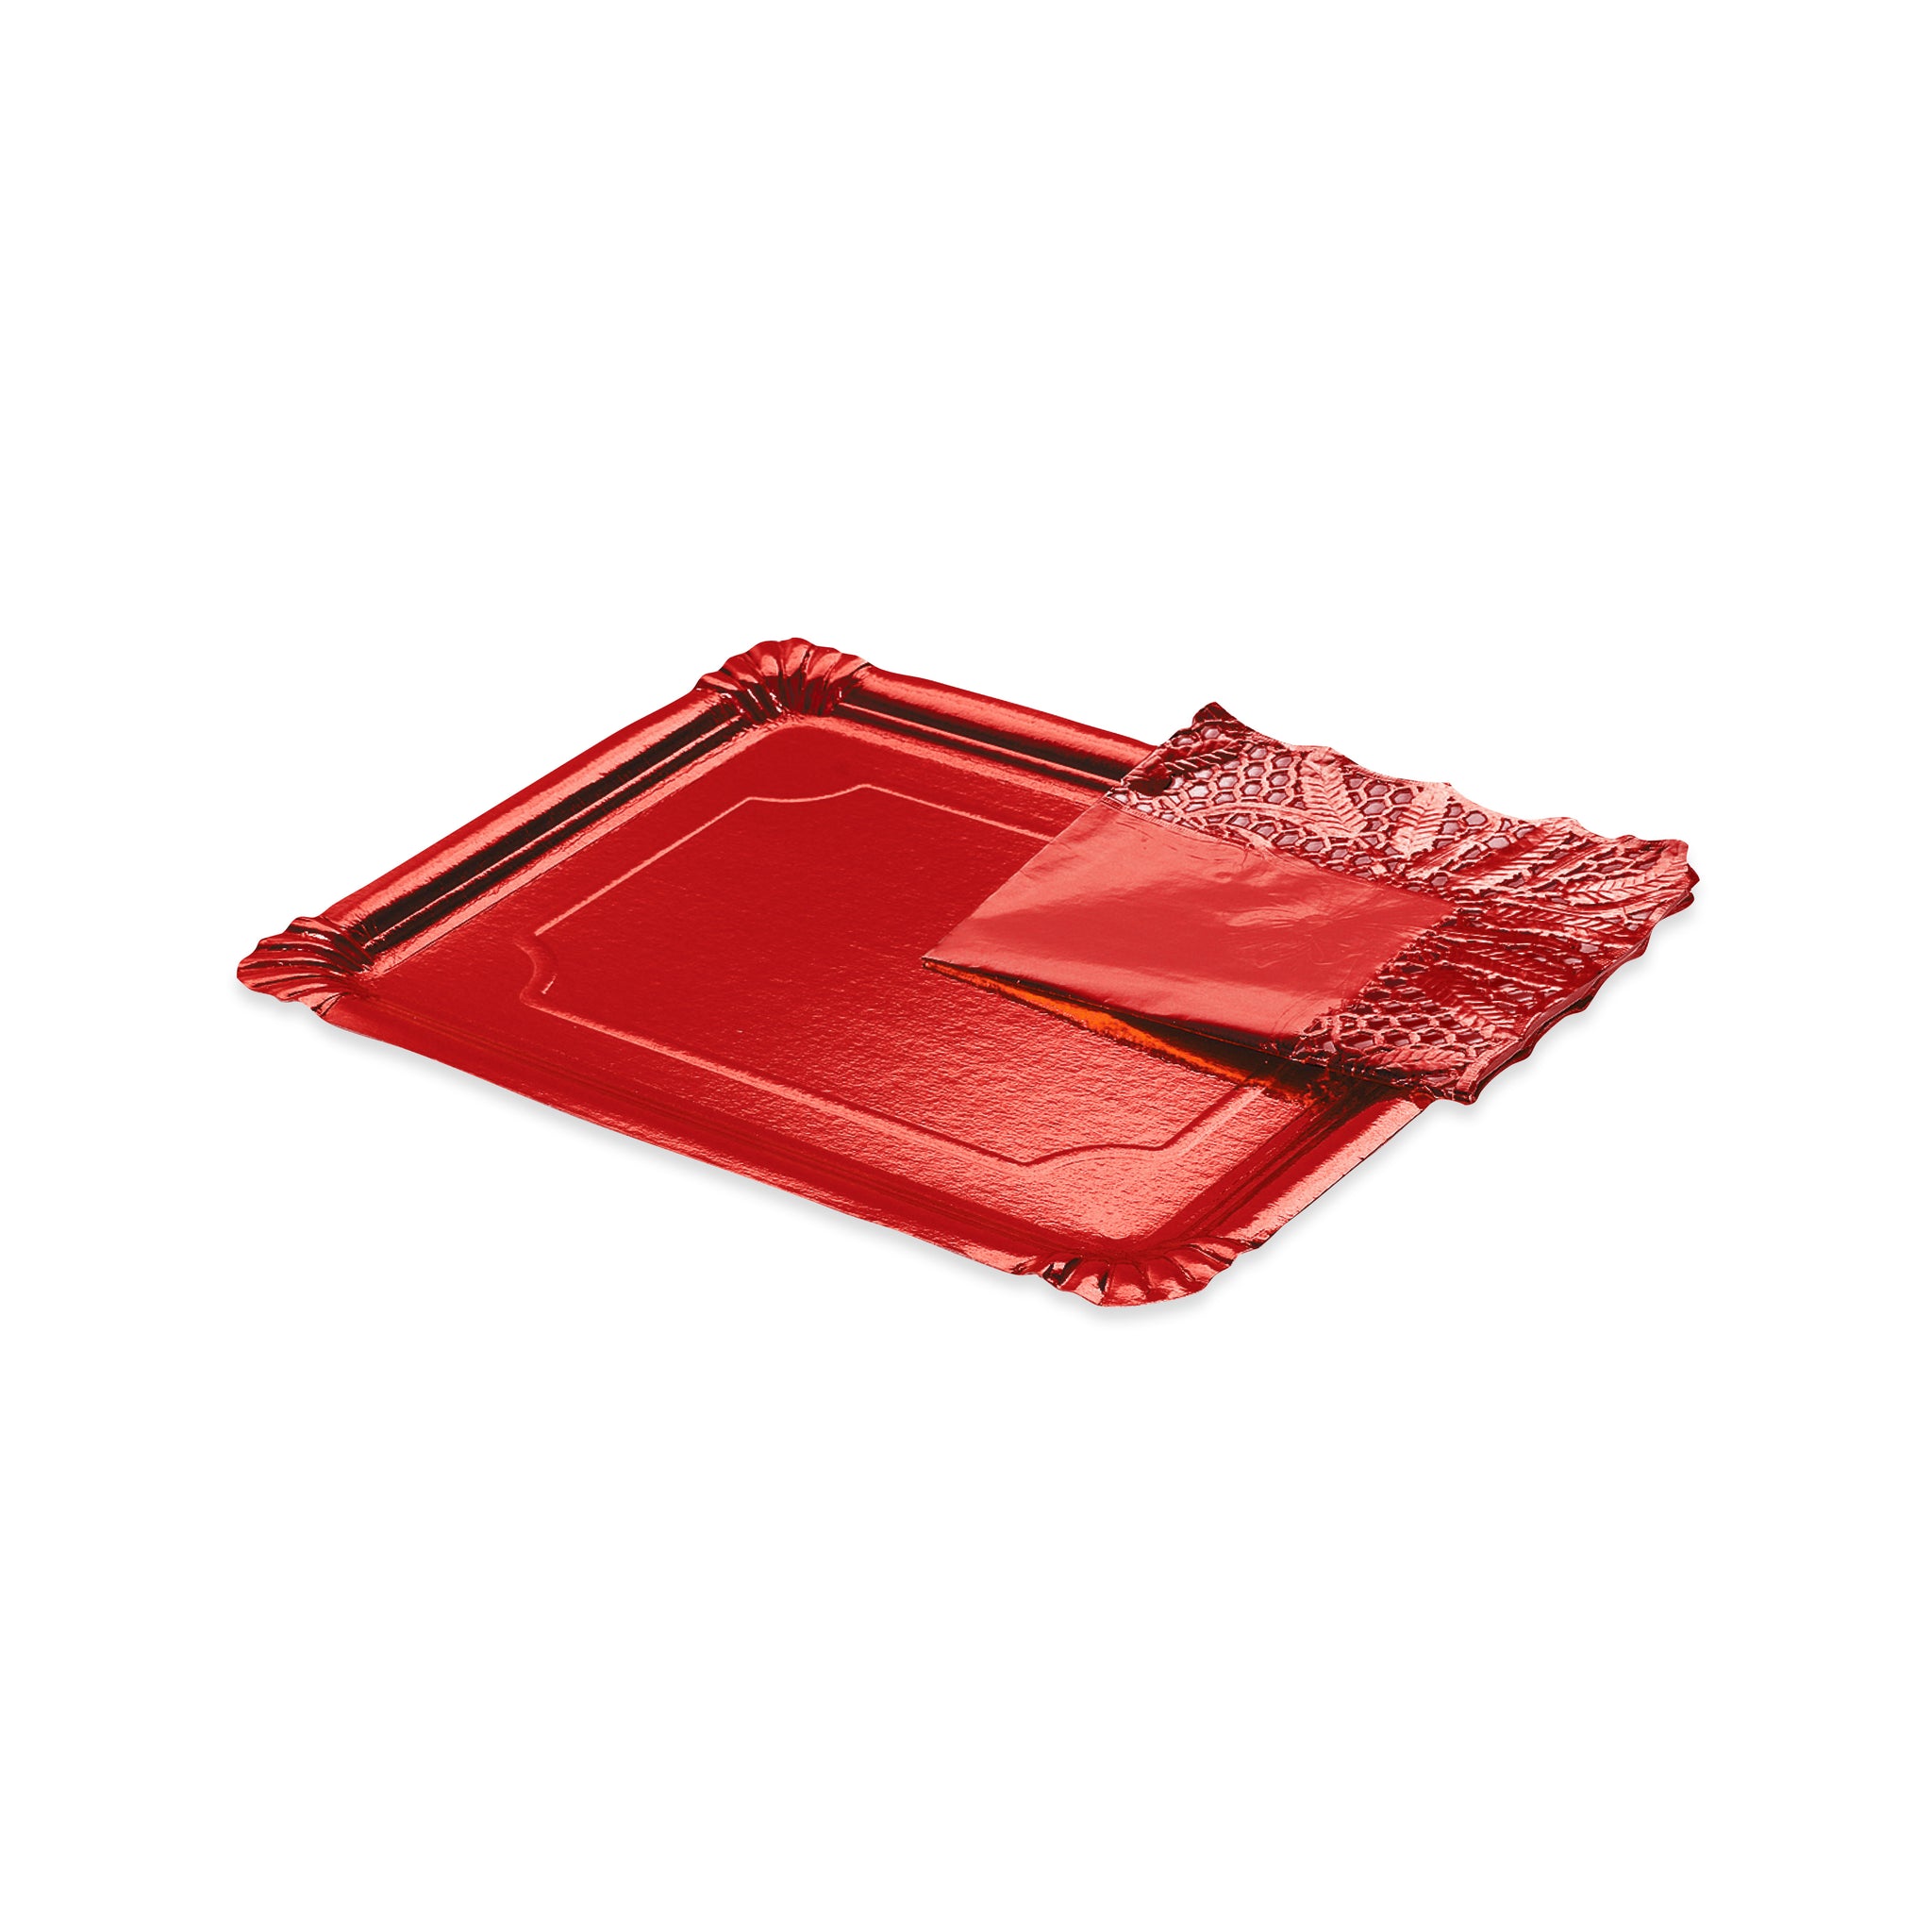 Rectangular blond tray 22 x 28 cm red